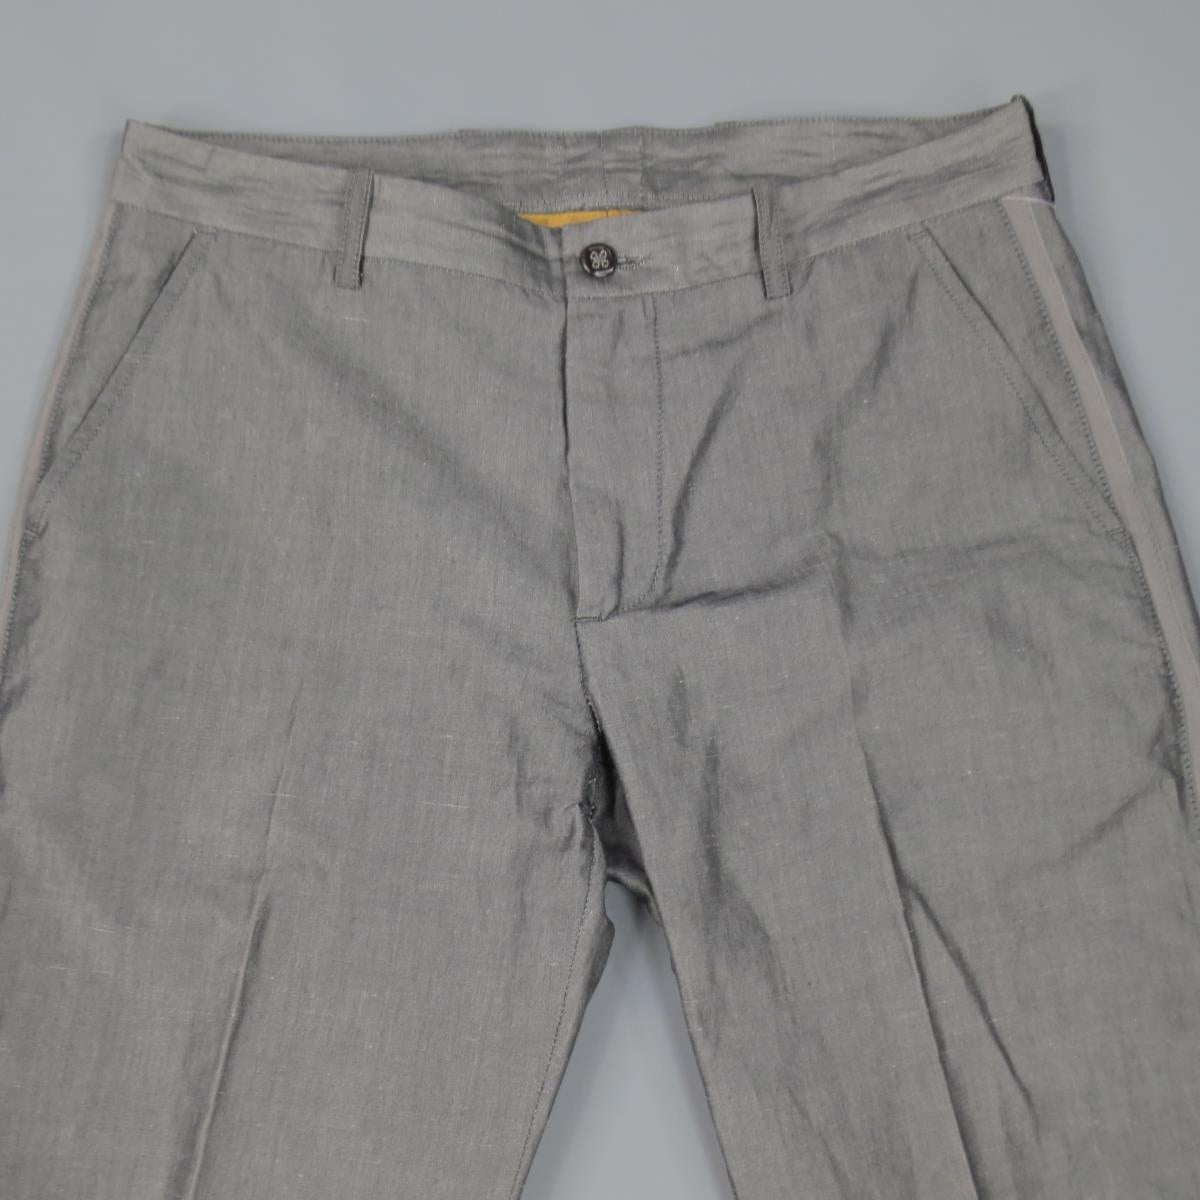 ETRO Size 32 Dark Gray Textured Cotton Blend Dress Pants